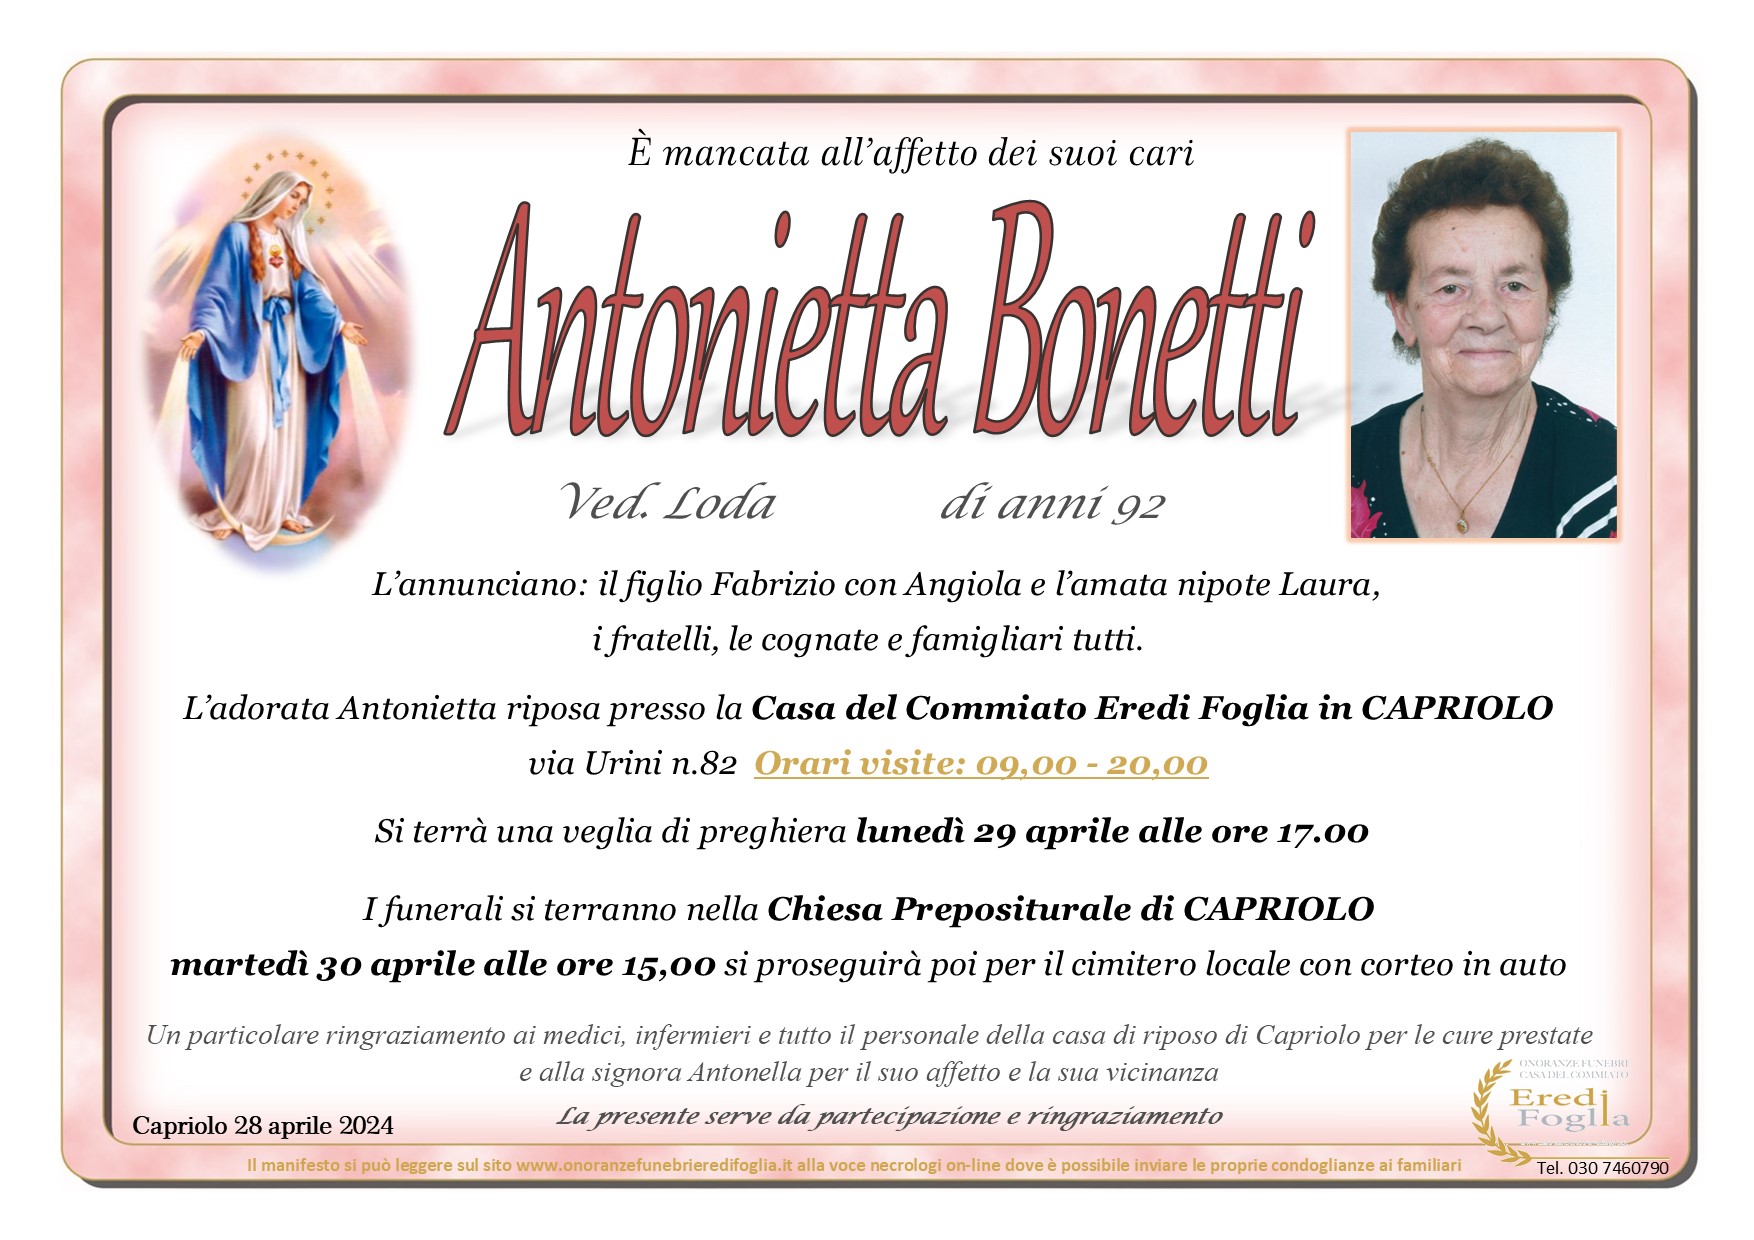 Antonietta Bonetti